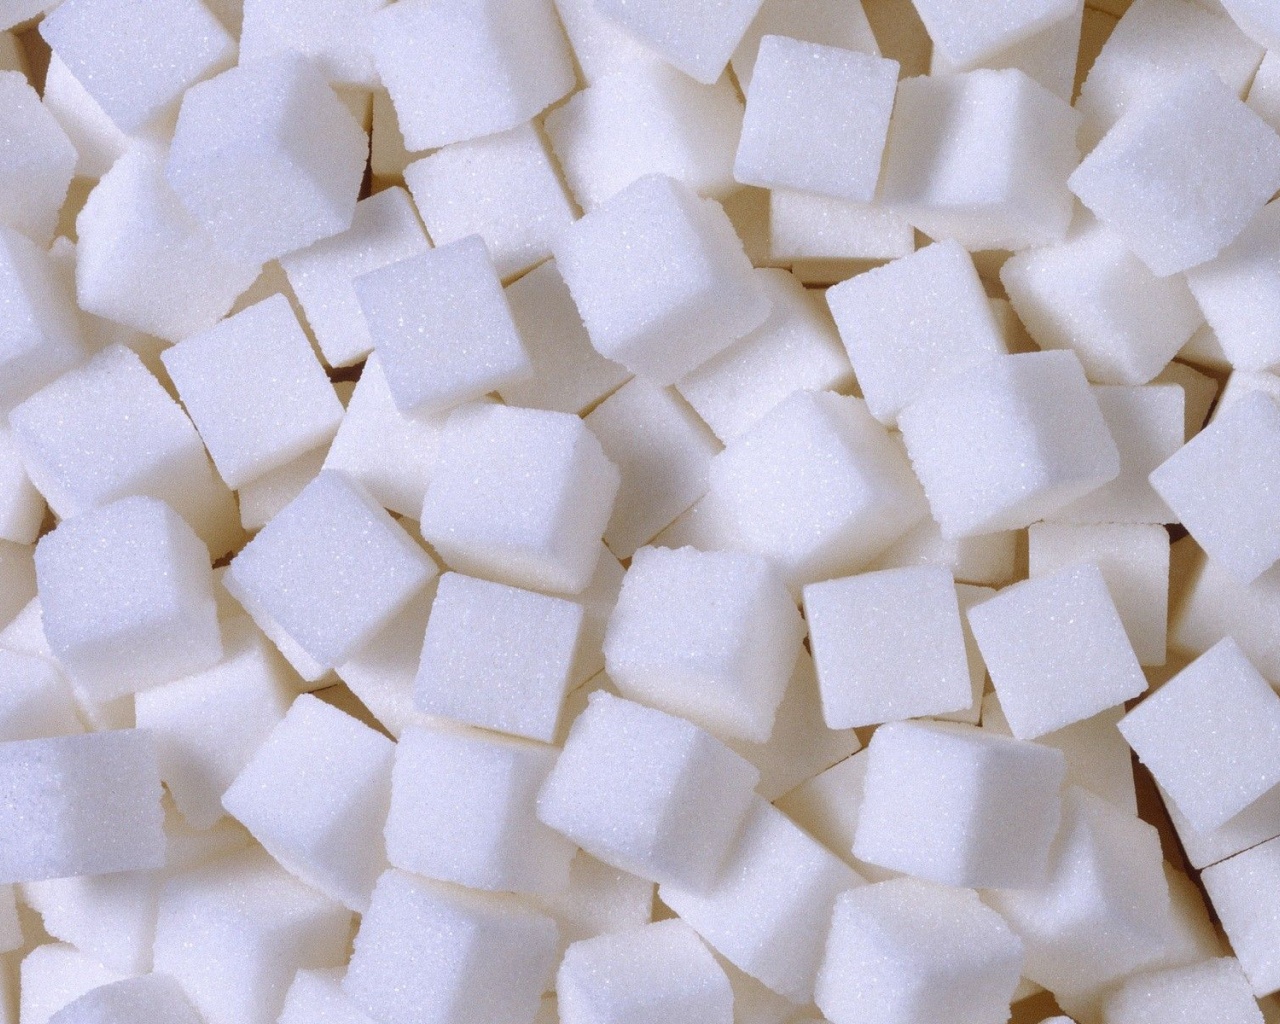 White Food Sugar Cubes